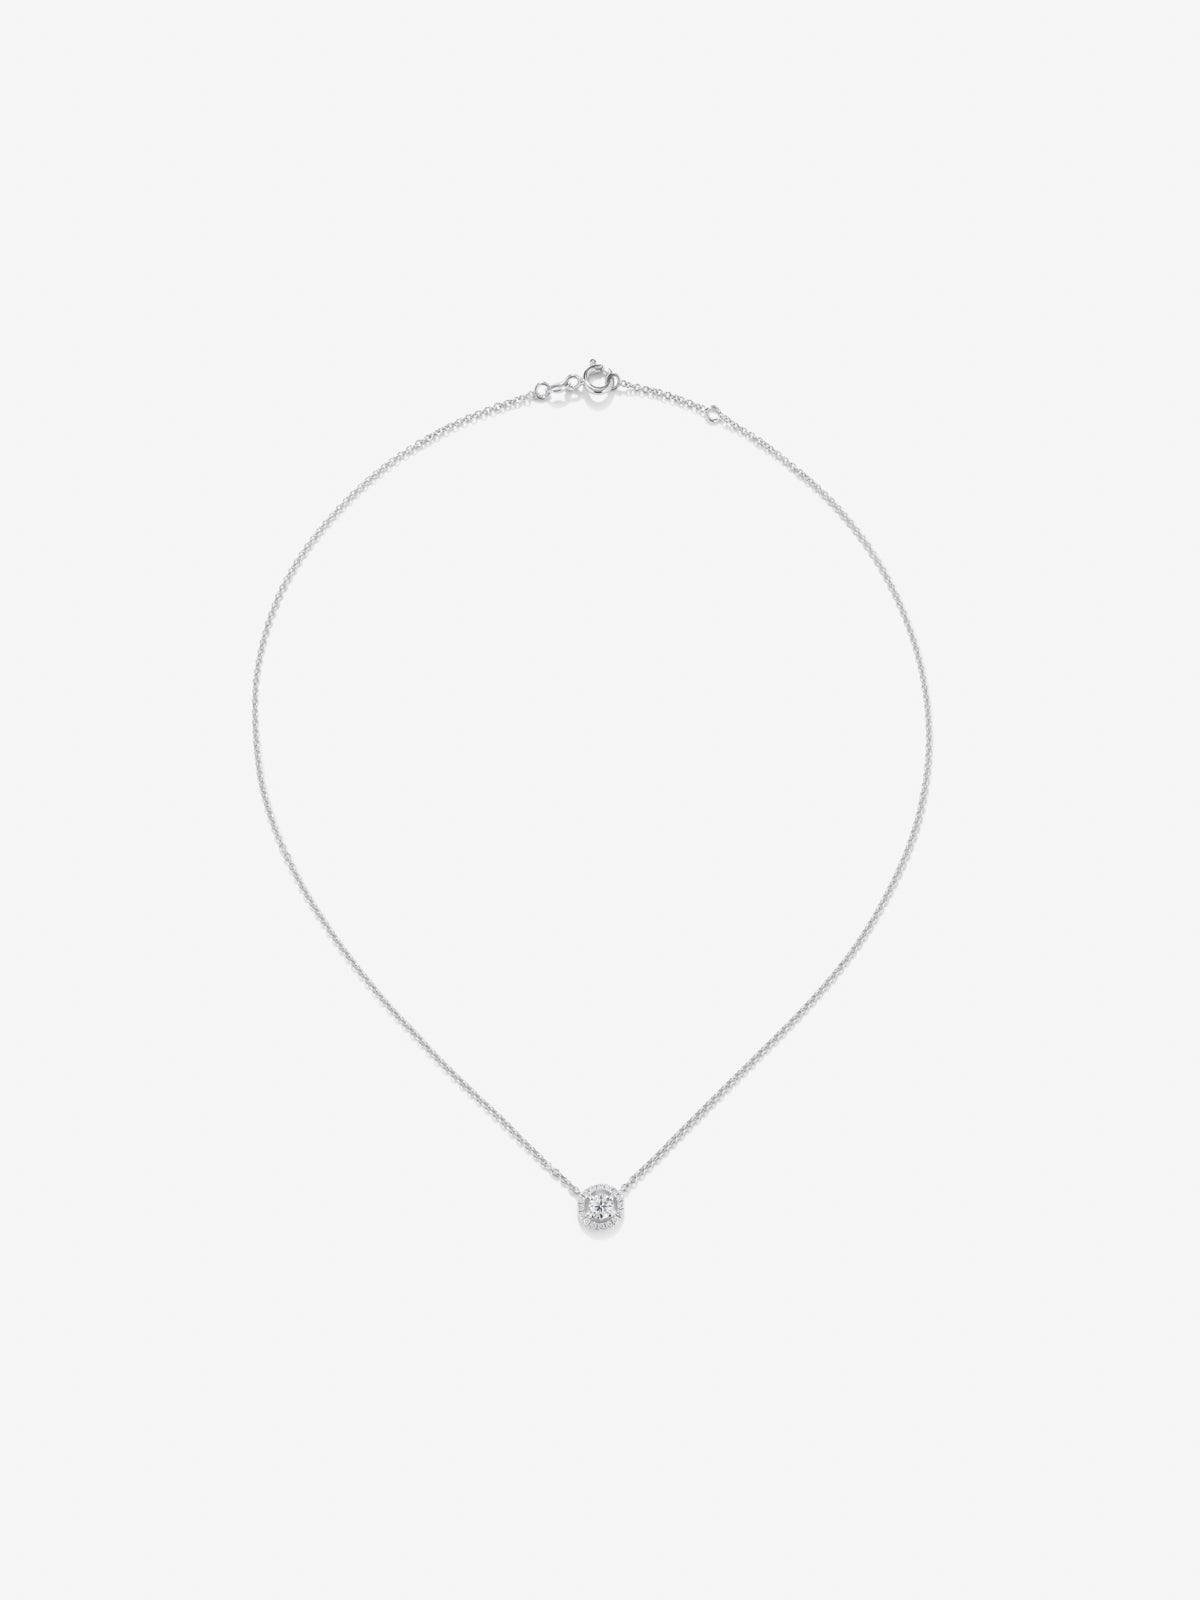 18K white gold chain pendant with solitary diamond and diamond urla